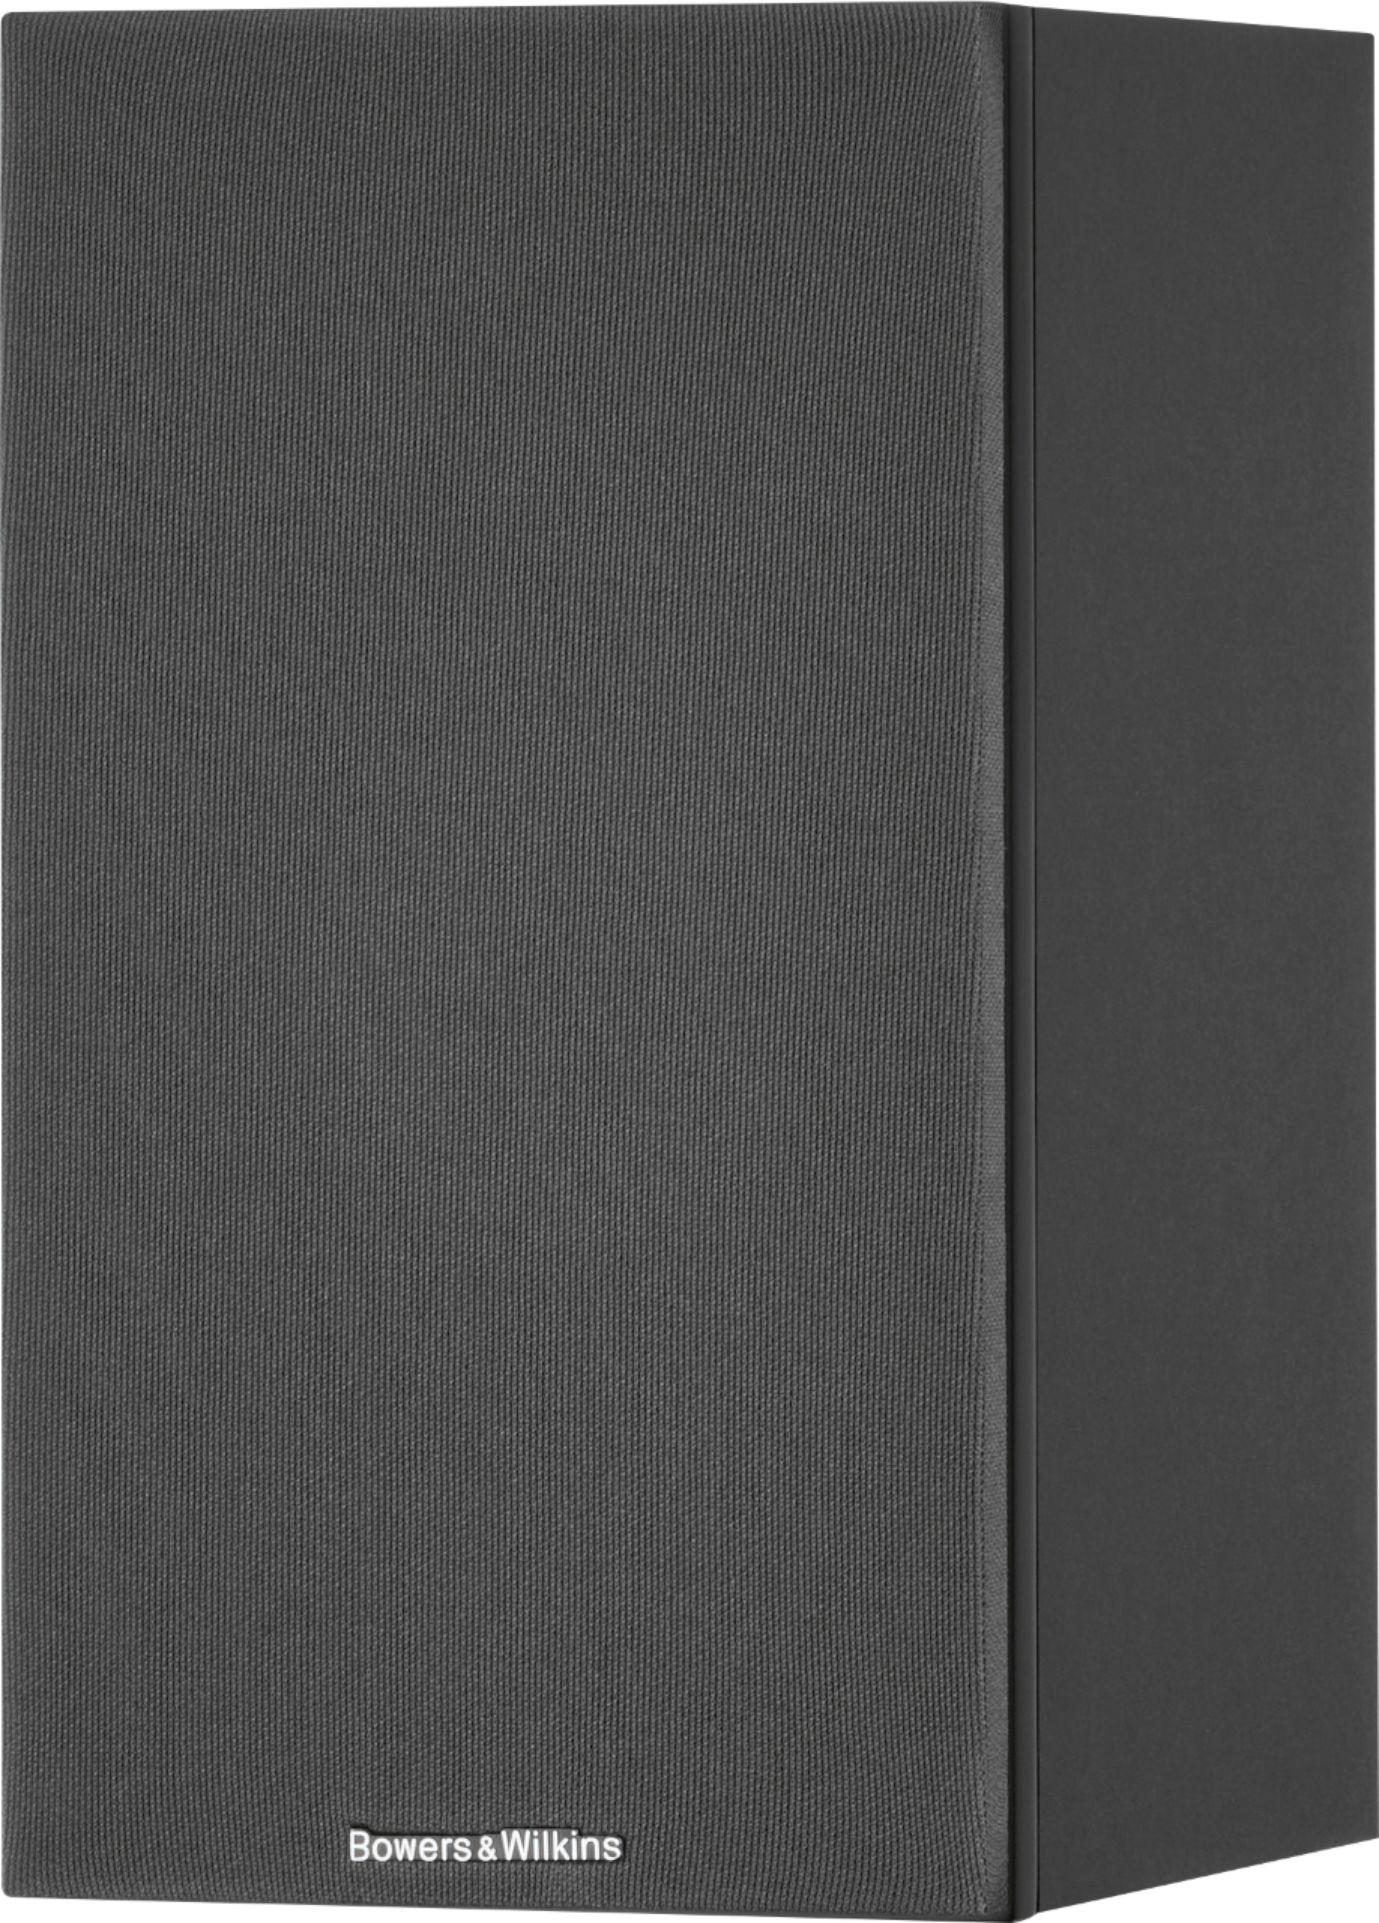 Left View: Bowers & Wilkins - 600 Series Anniversary Edition 2-way Bookshelf Speaker w/5" midbass (pair) - Black